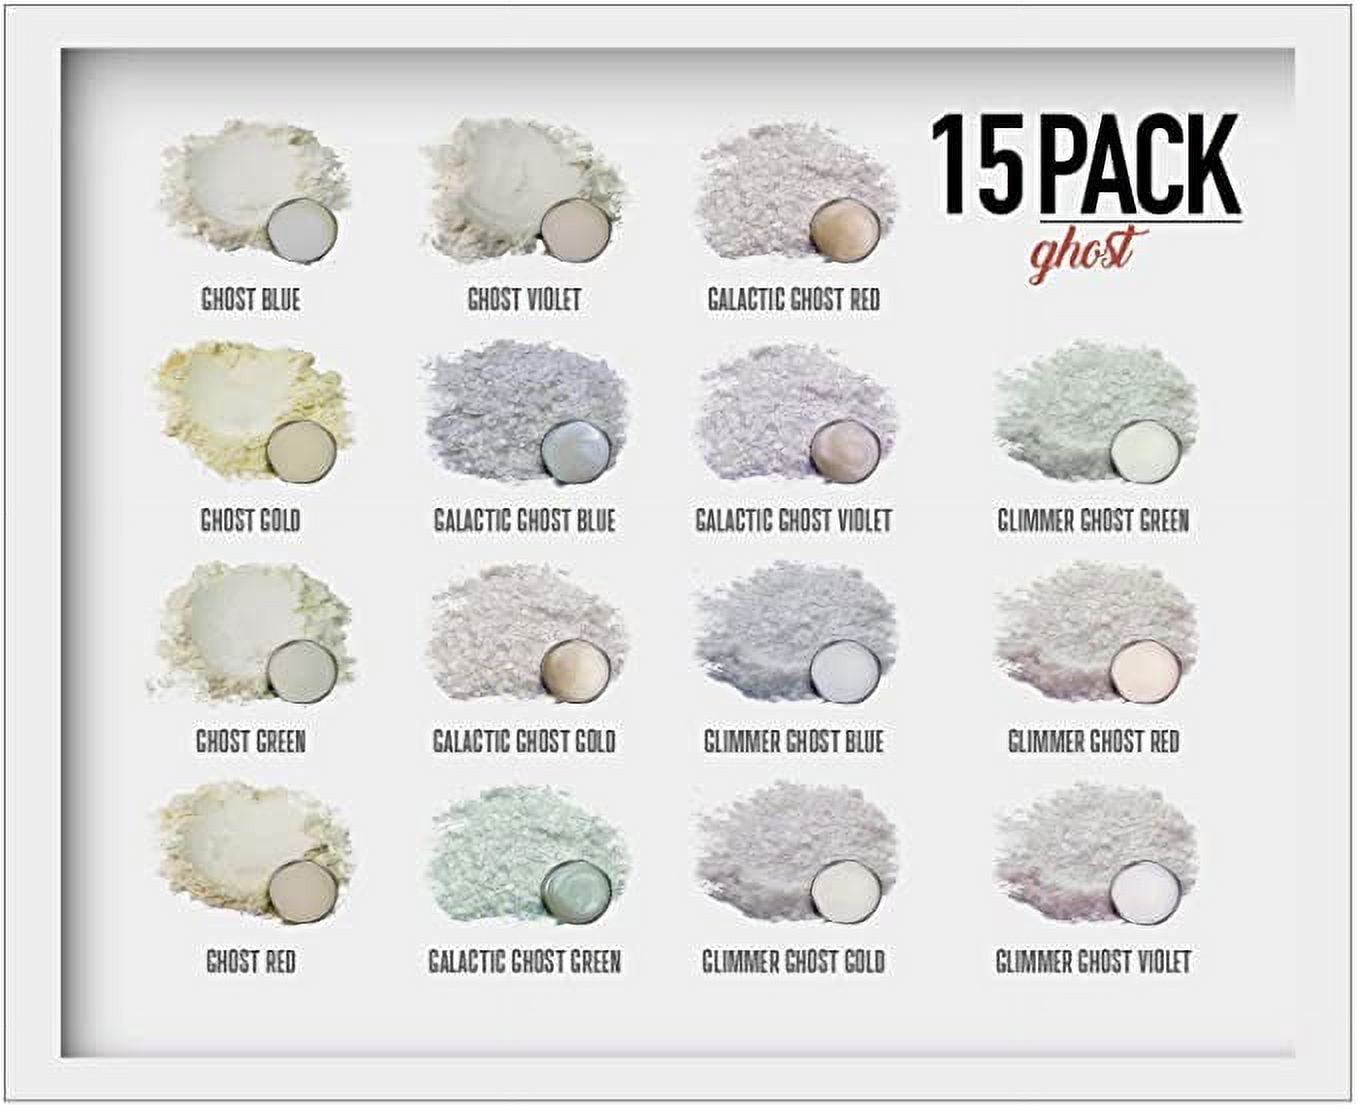 Eye Candy Mica Powder - Pigment Powder 10-Pack Set E - Colorant